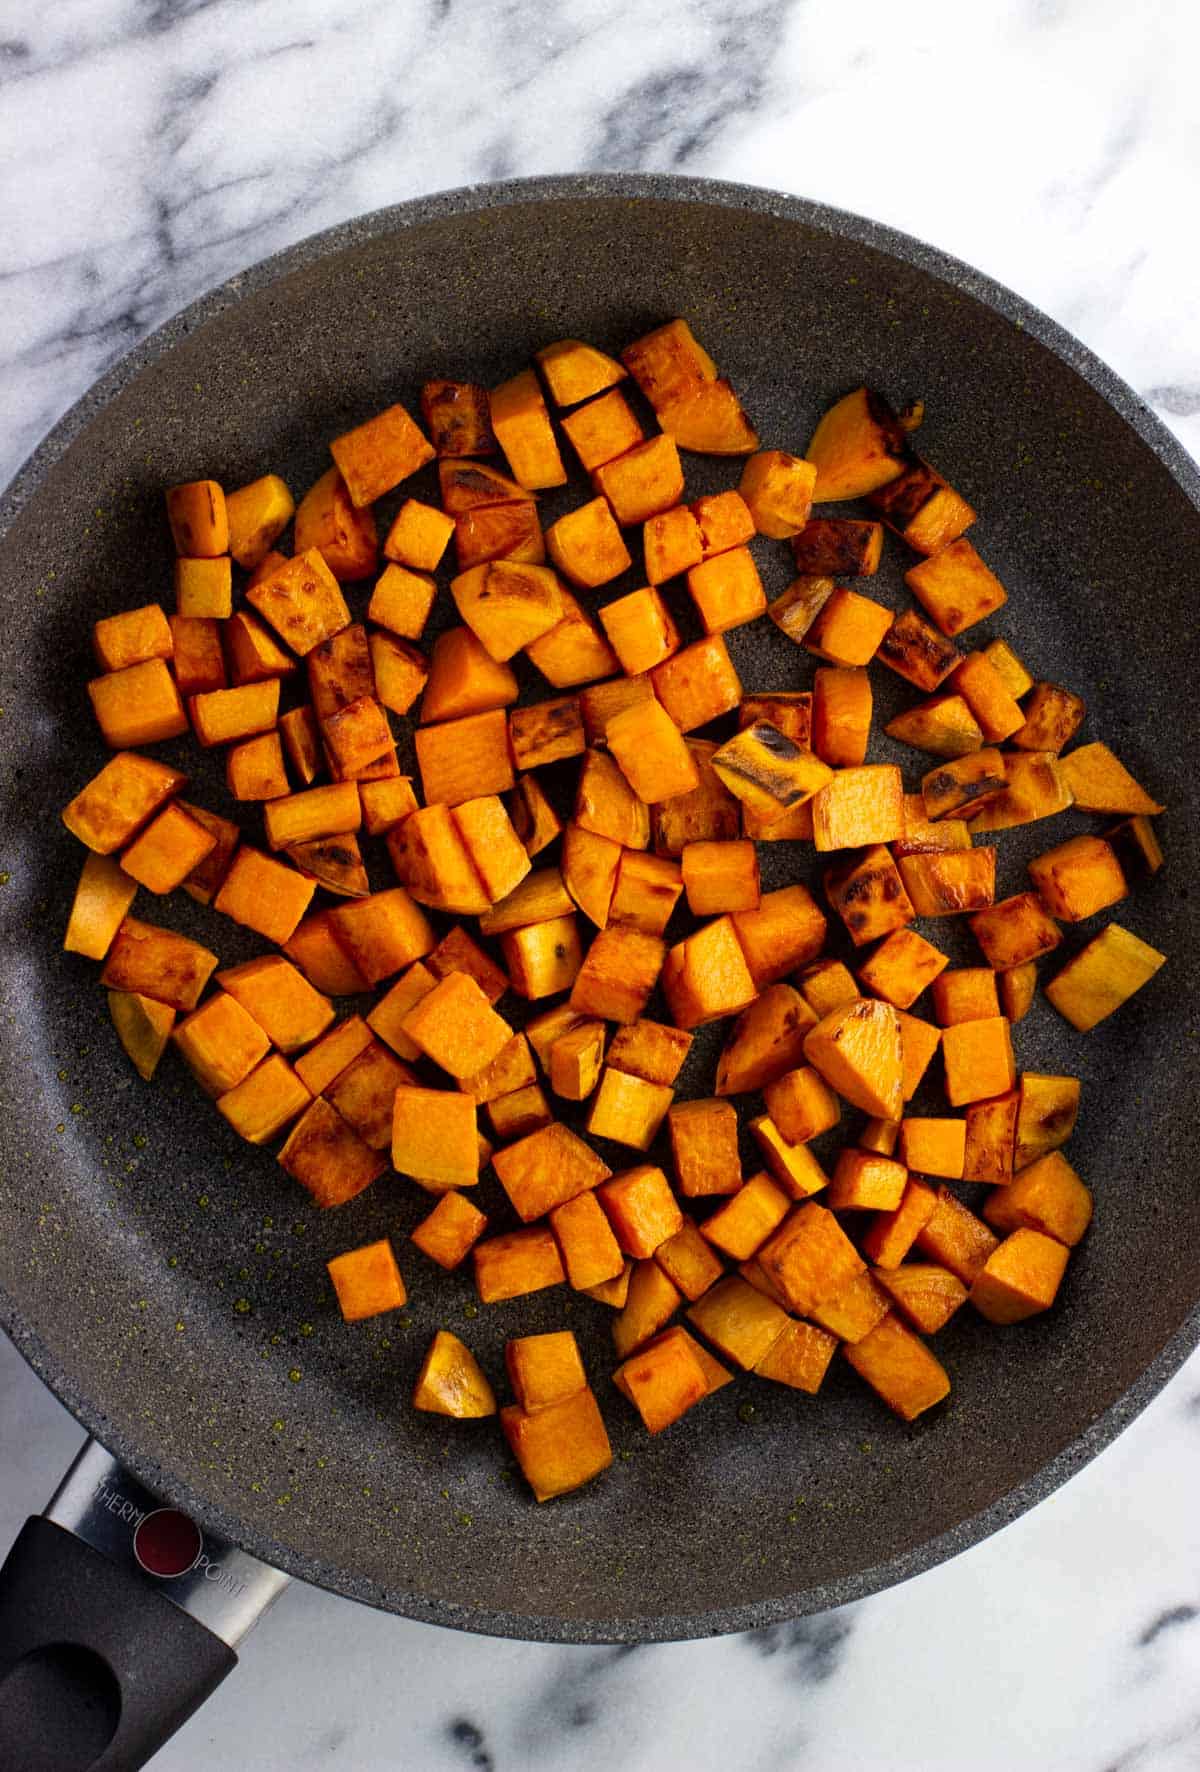 Sautéed sweet potato cubes in a skillet.